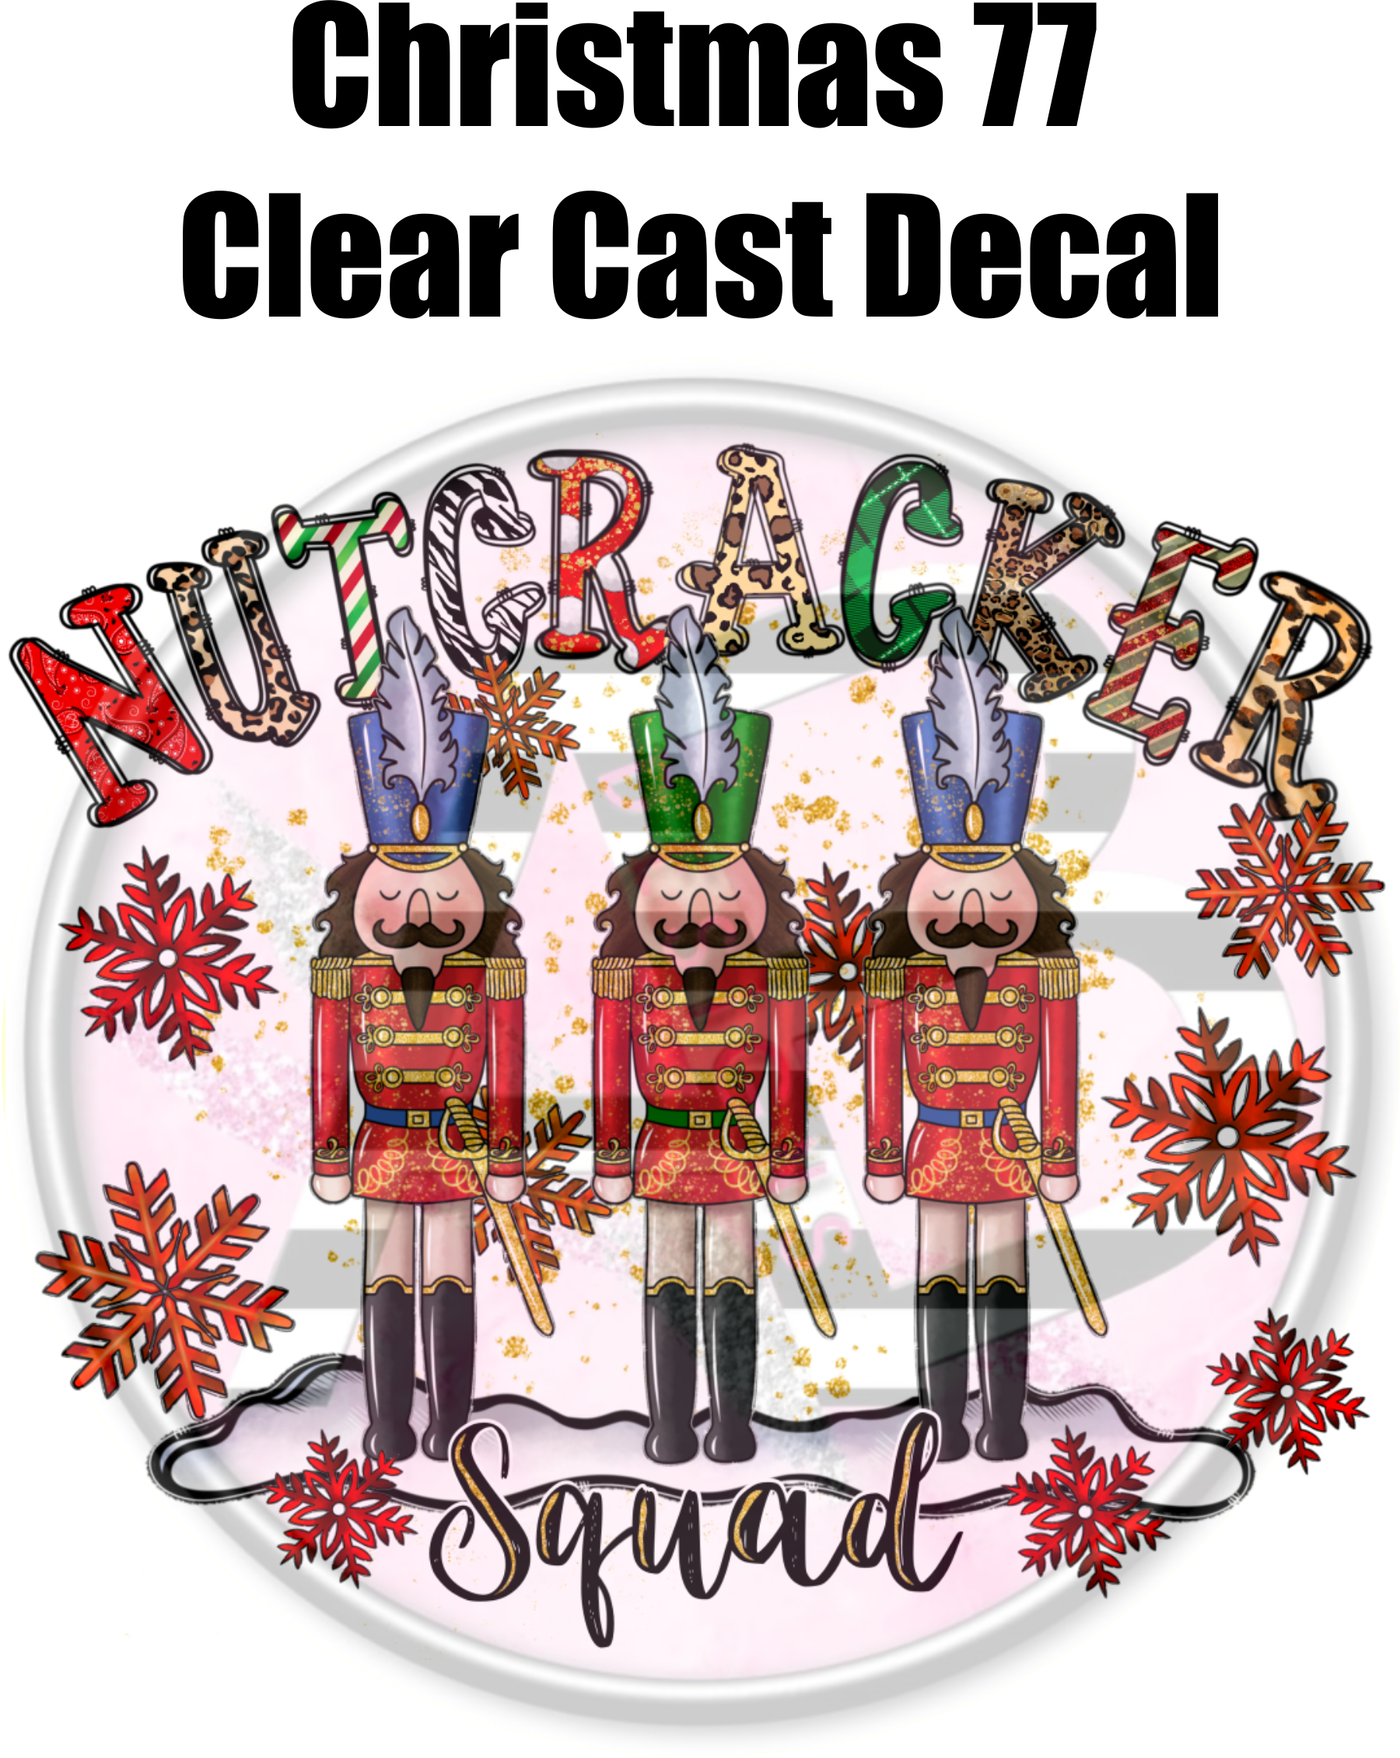 Christmas 77 - Clear Cast Decal